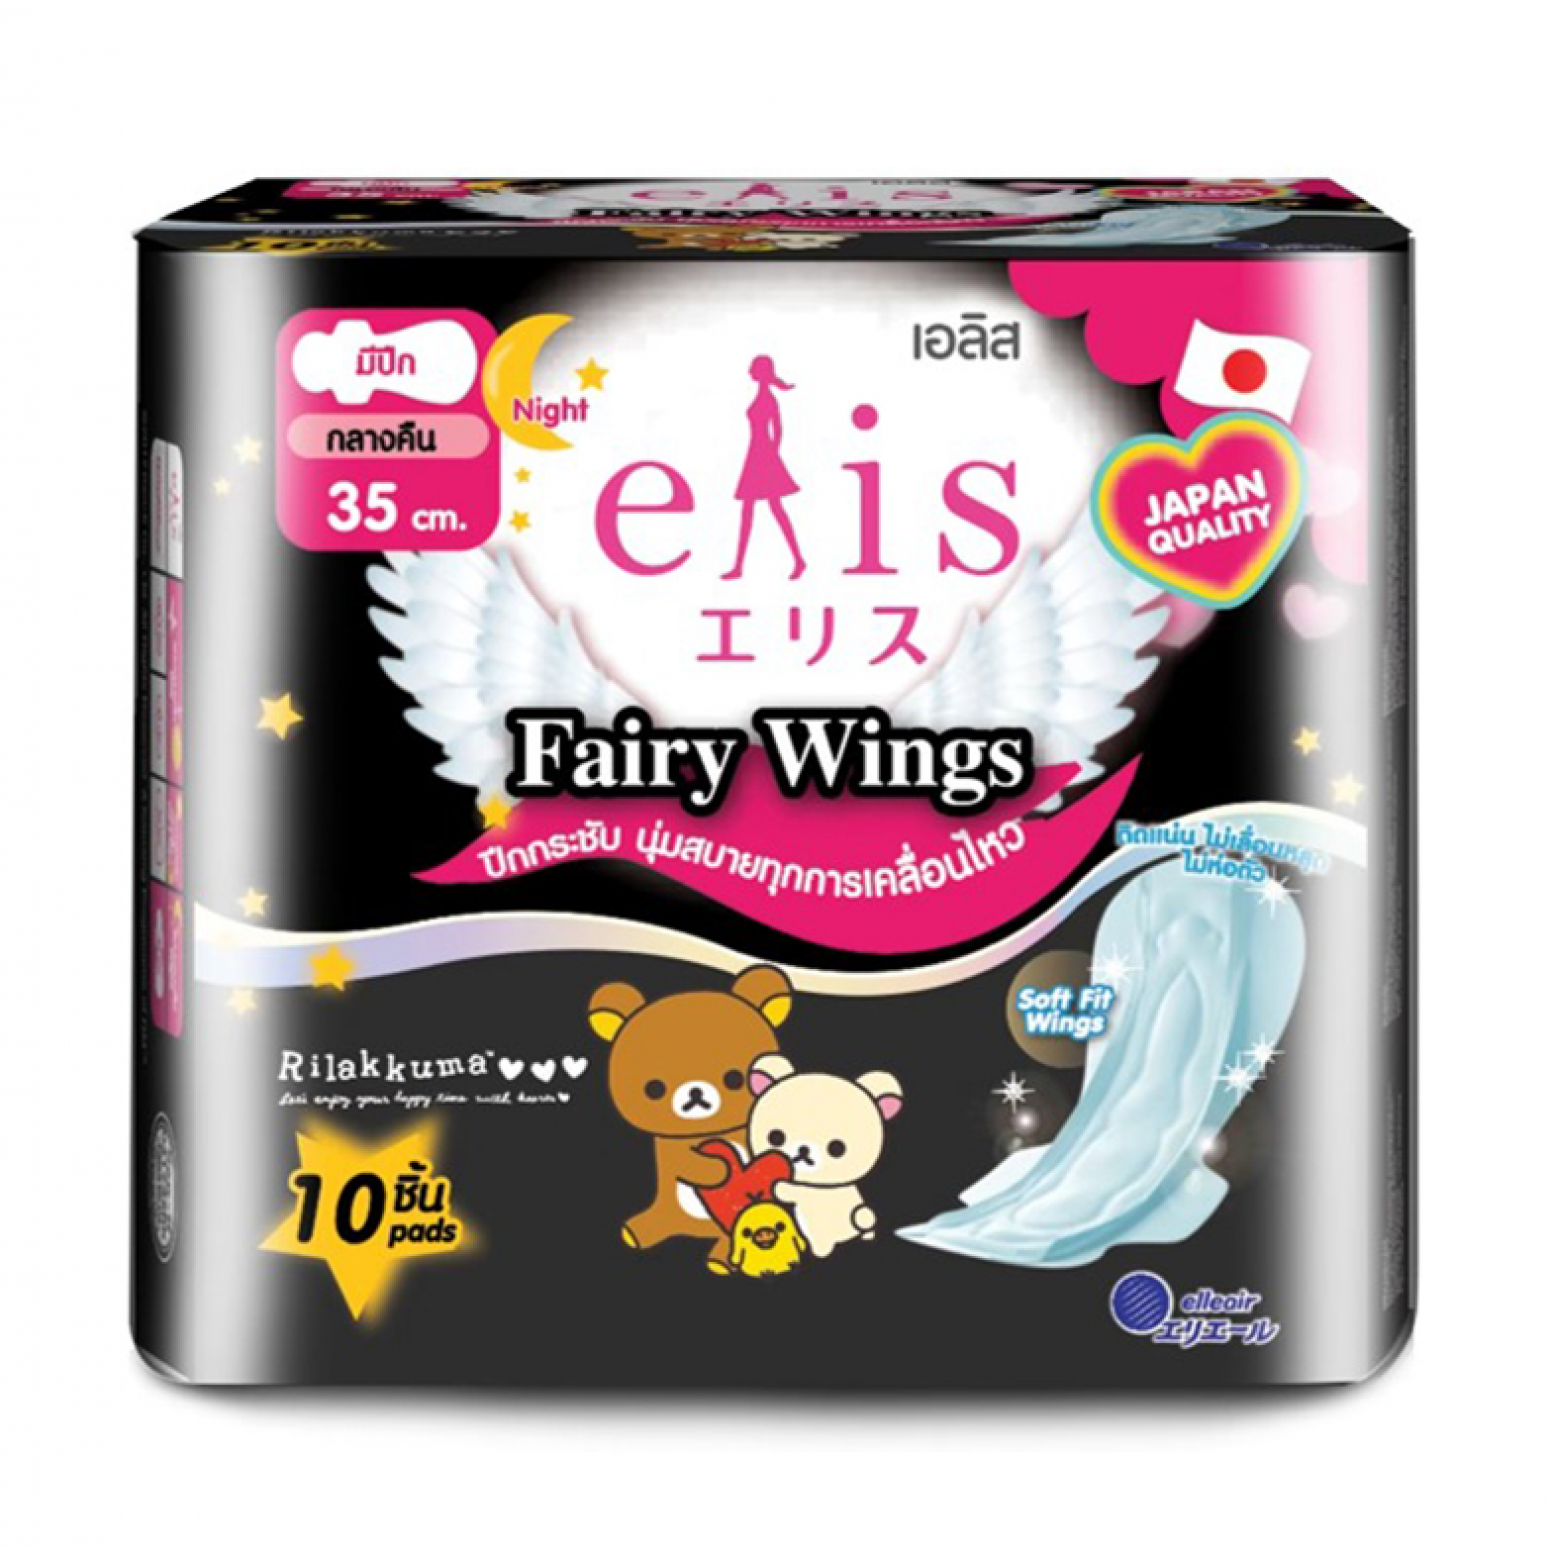 Elis Fairy Wings Sanitary Napkin Night 35cm. 10pcs.